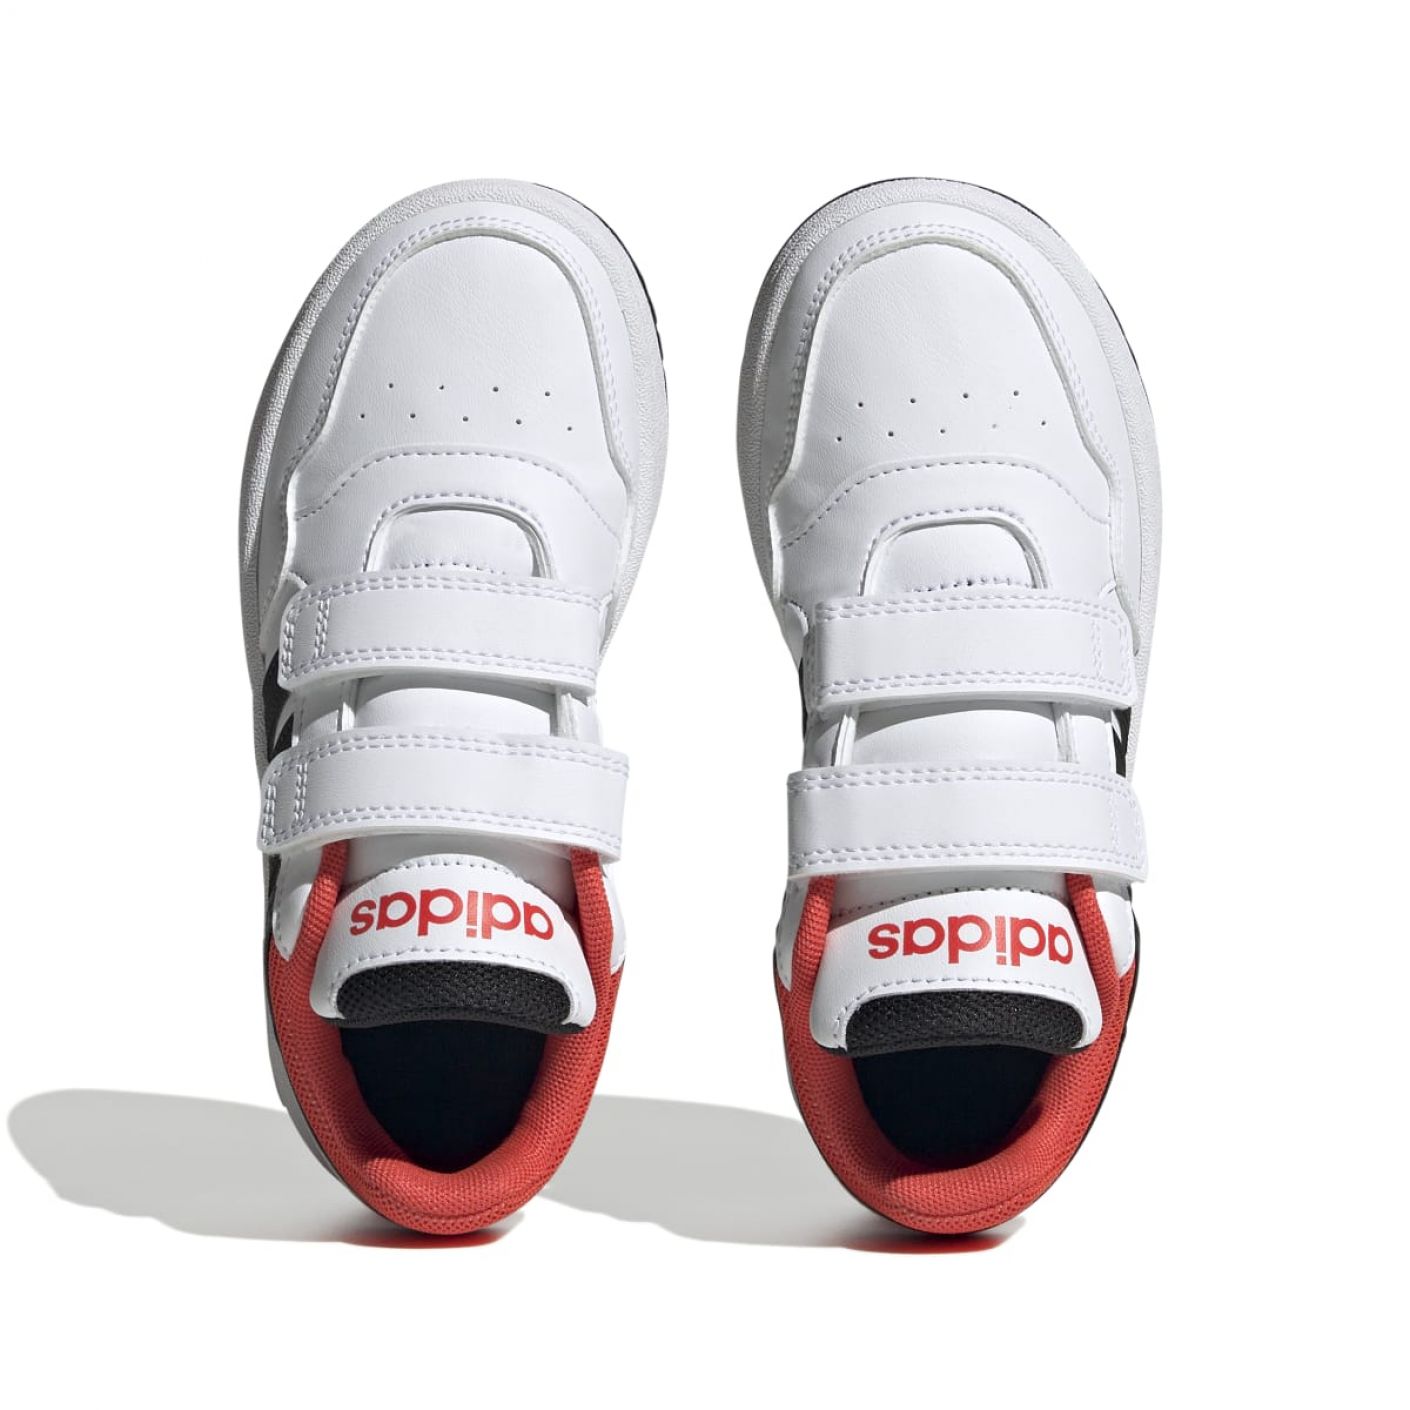 Adidas Hoops 3.0 con Strappo da Bambini